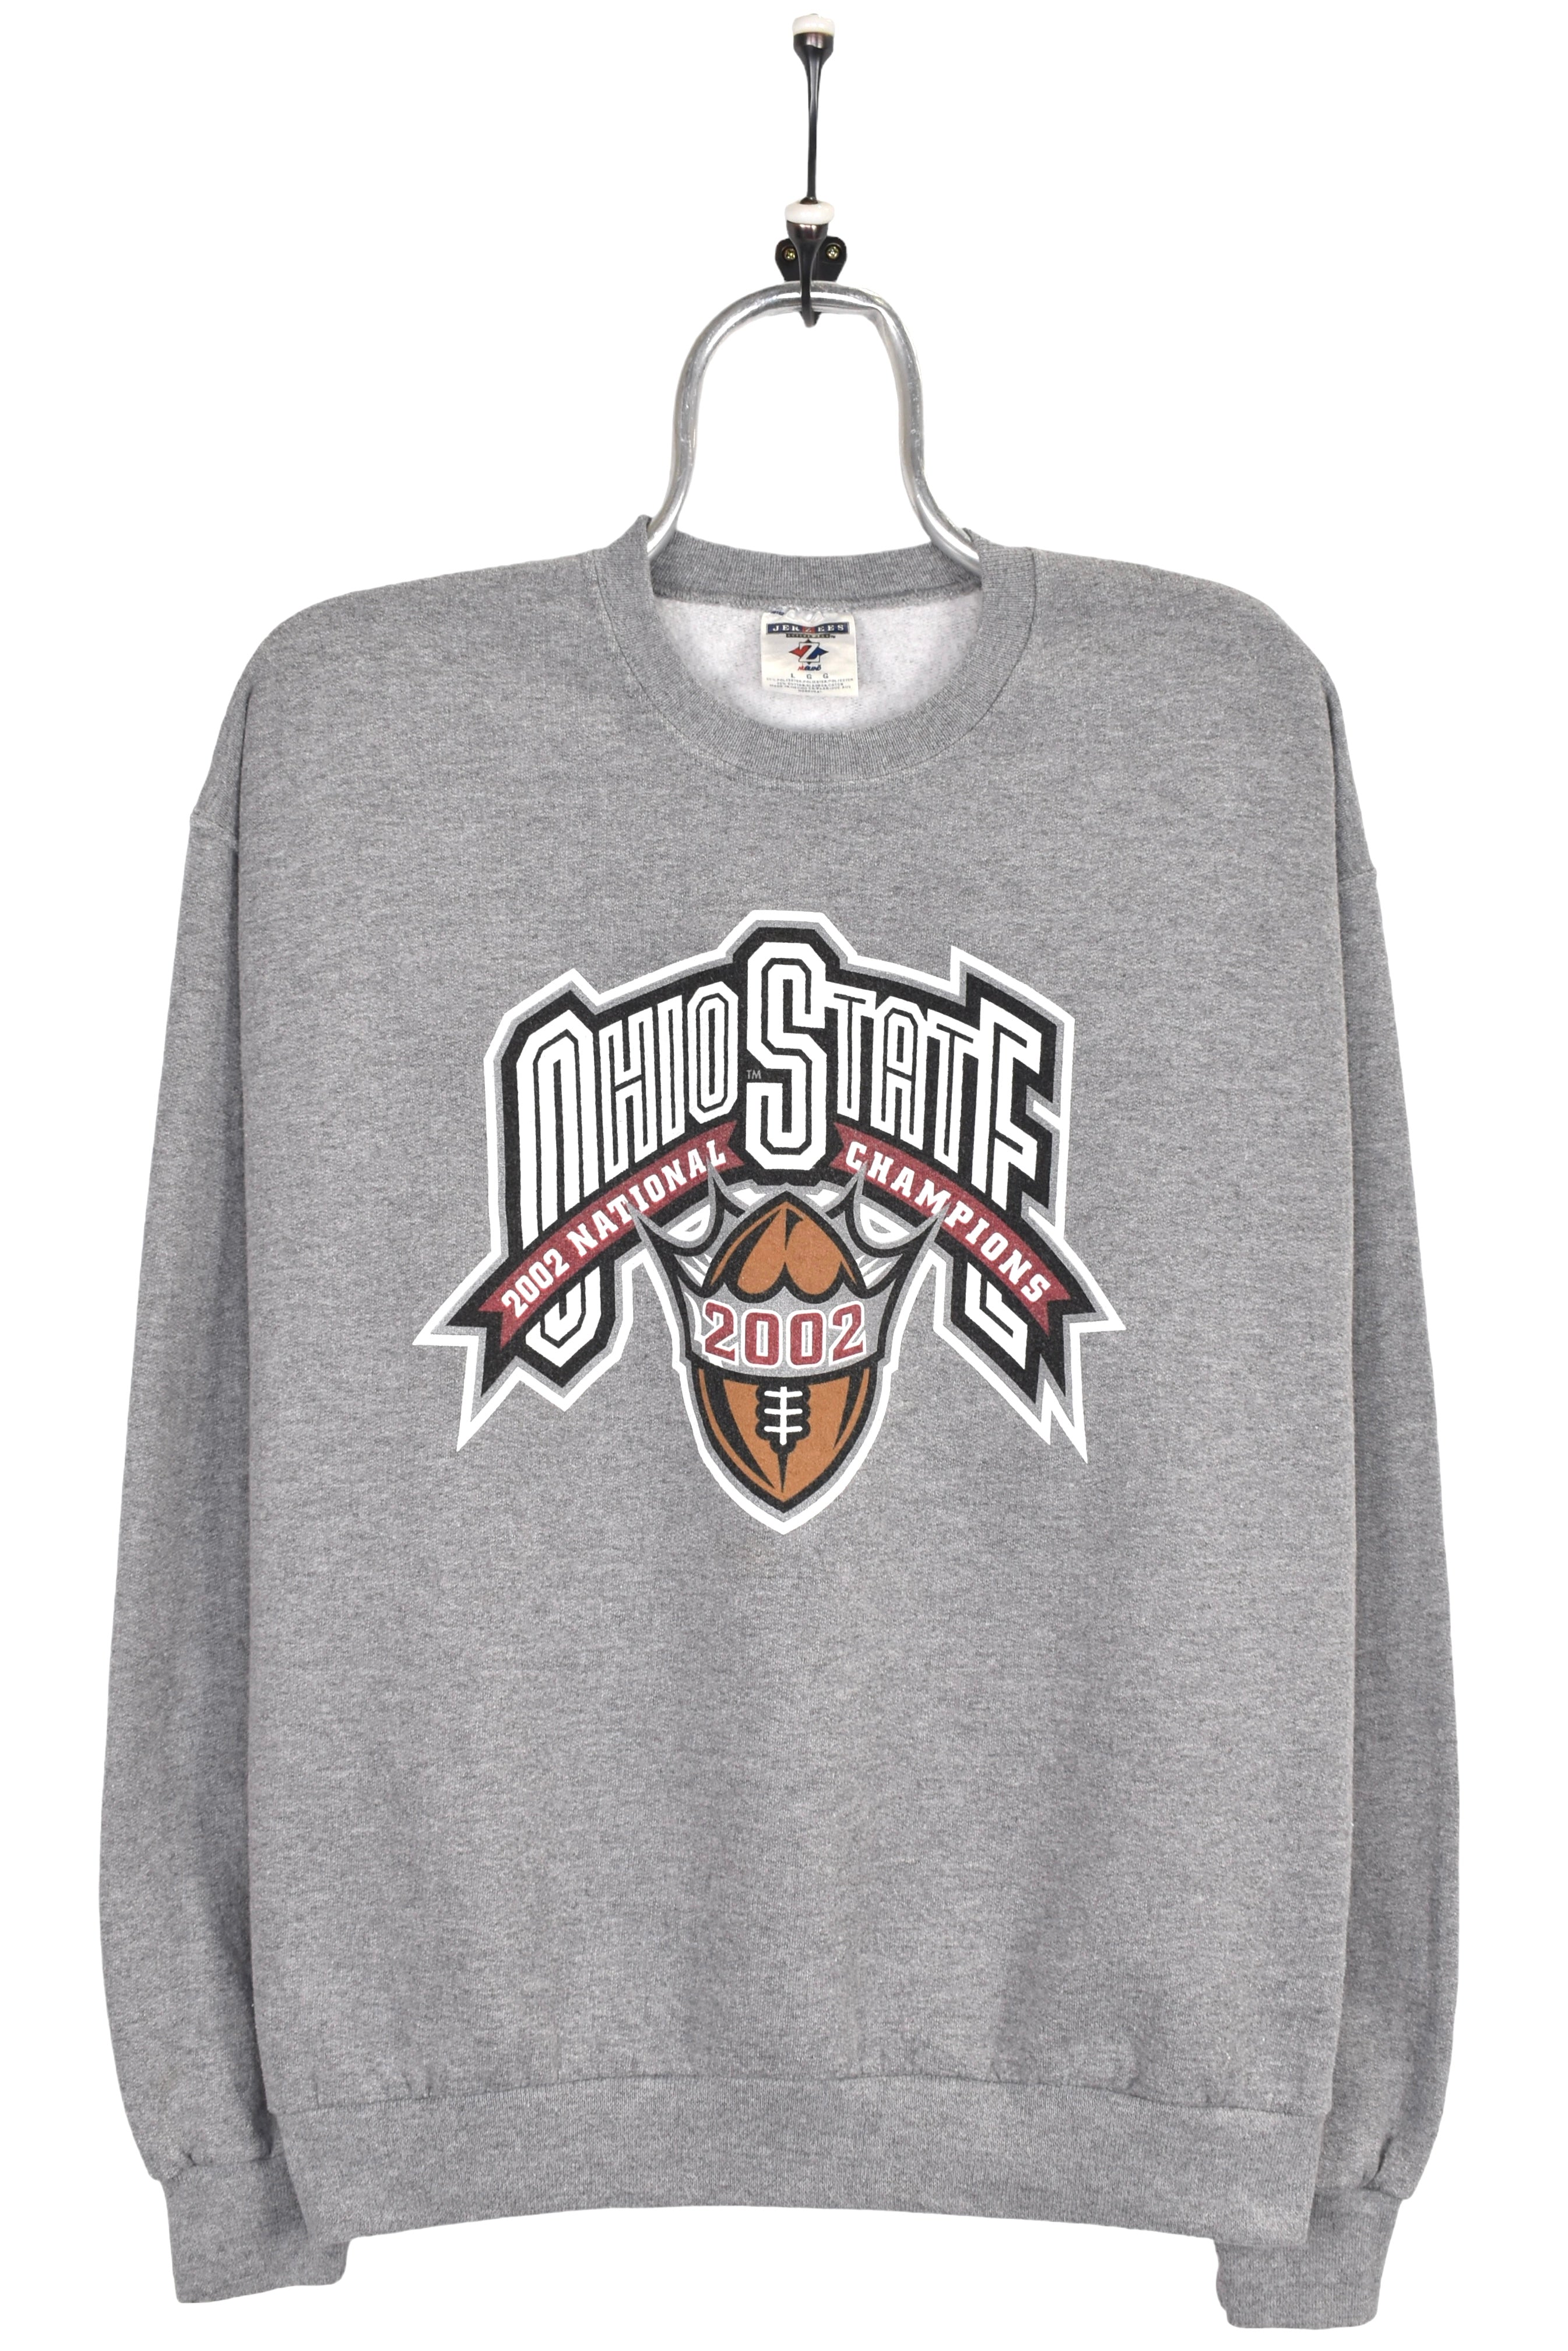 Vintage Ohio State University sweatshirt Medium, grey graphic crewneck